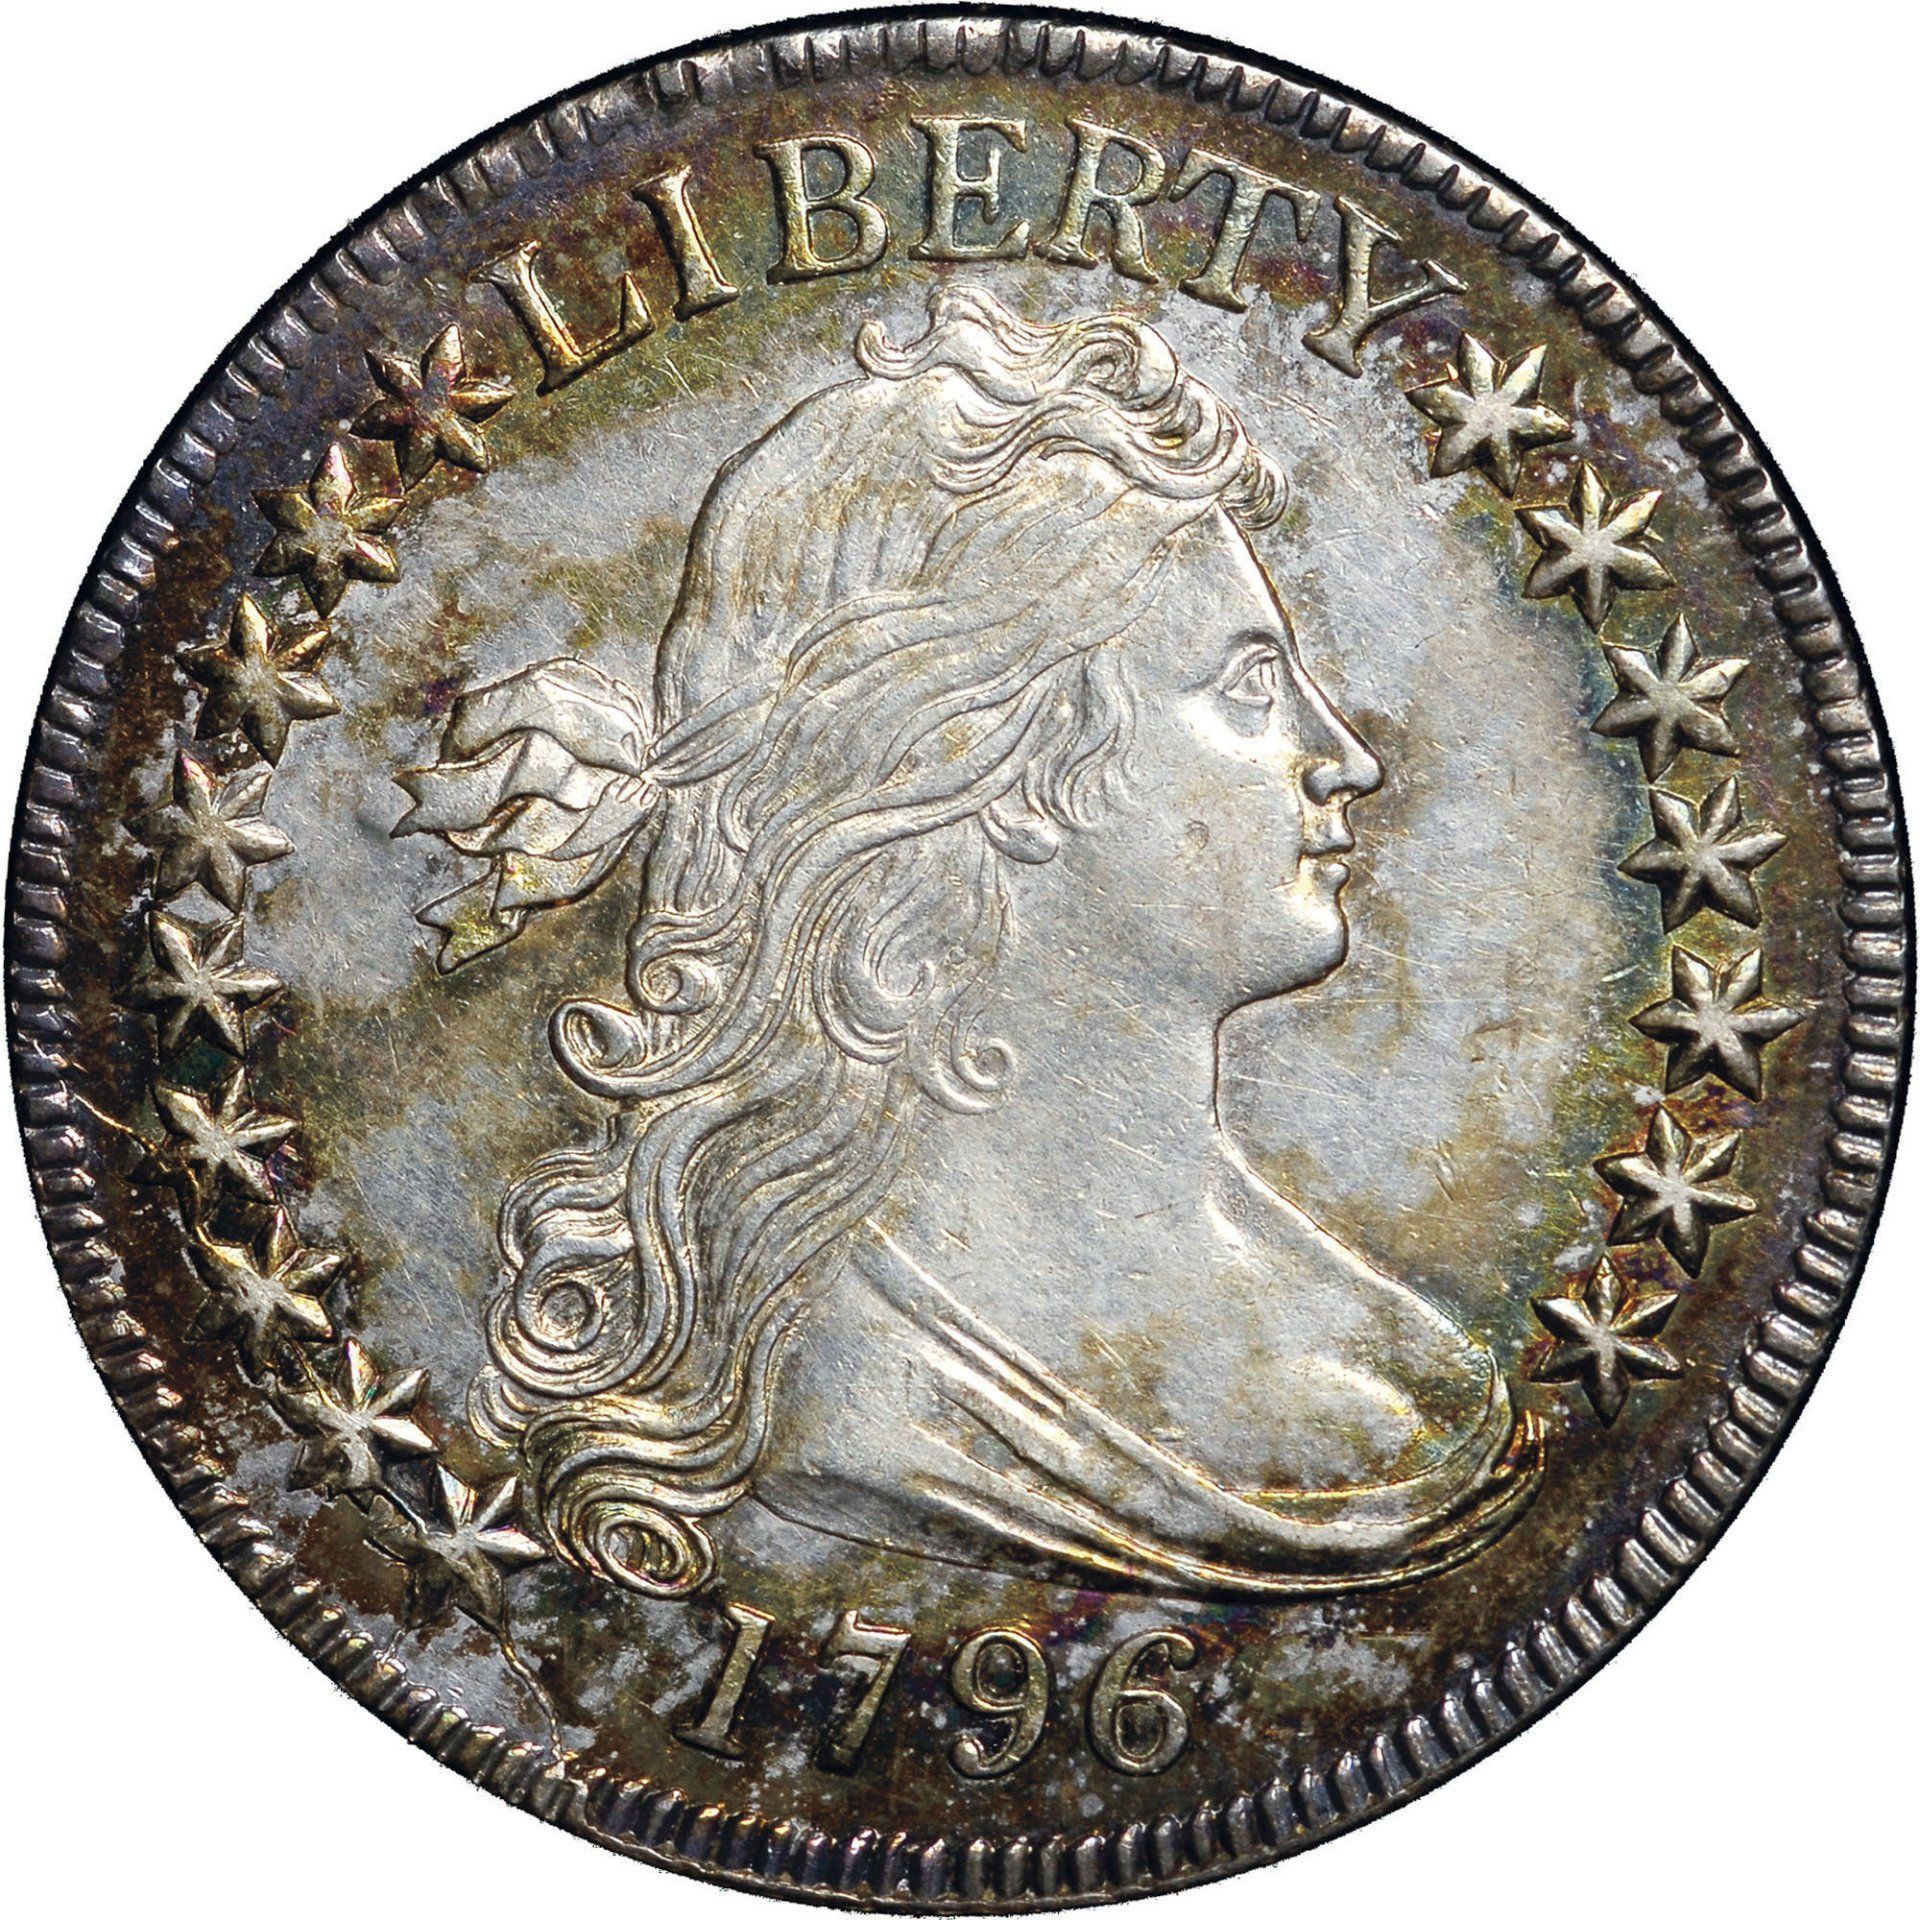 1796 Draped Bust half dollar 16 stars - Image courtesy of NGC